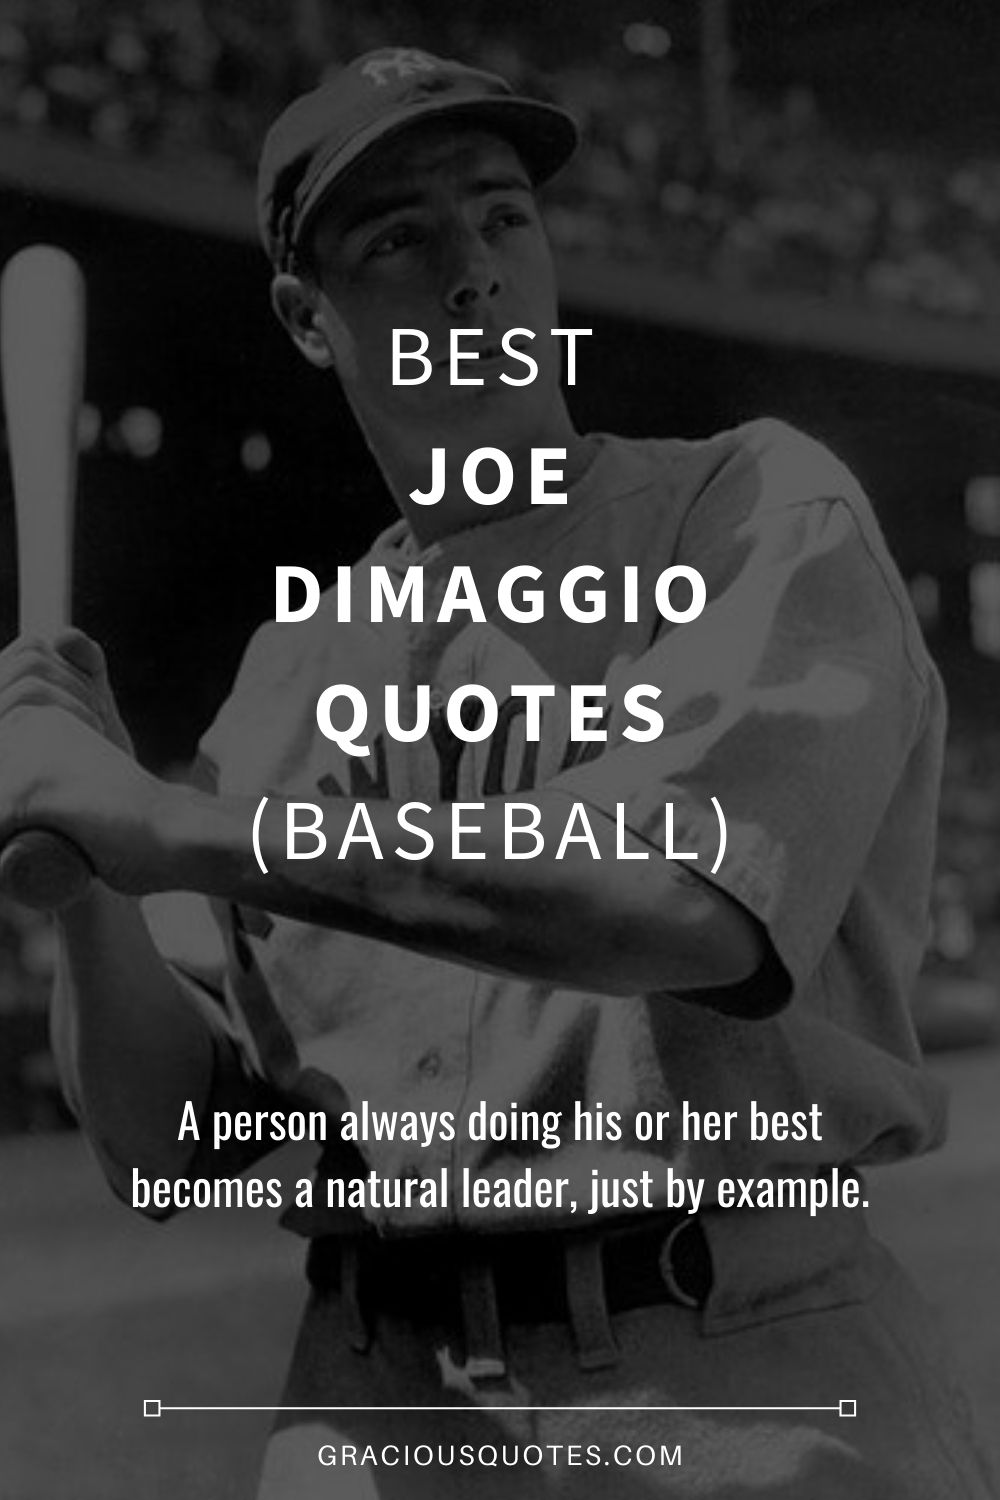 Best Joe DiMaggio Quotes (BASEBALL) - Gracious Quotes